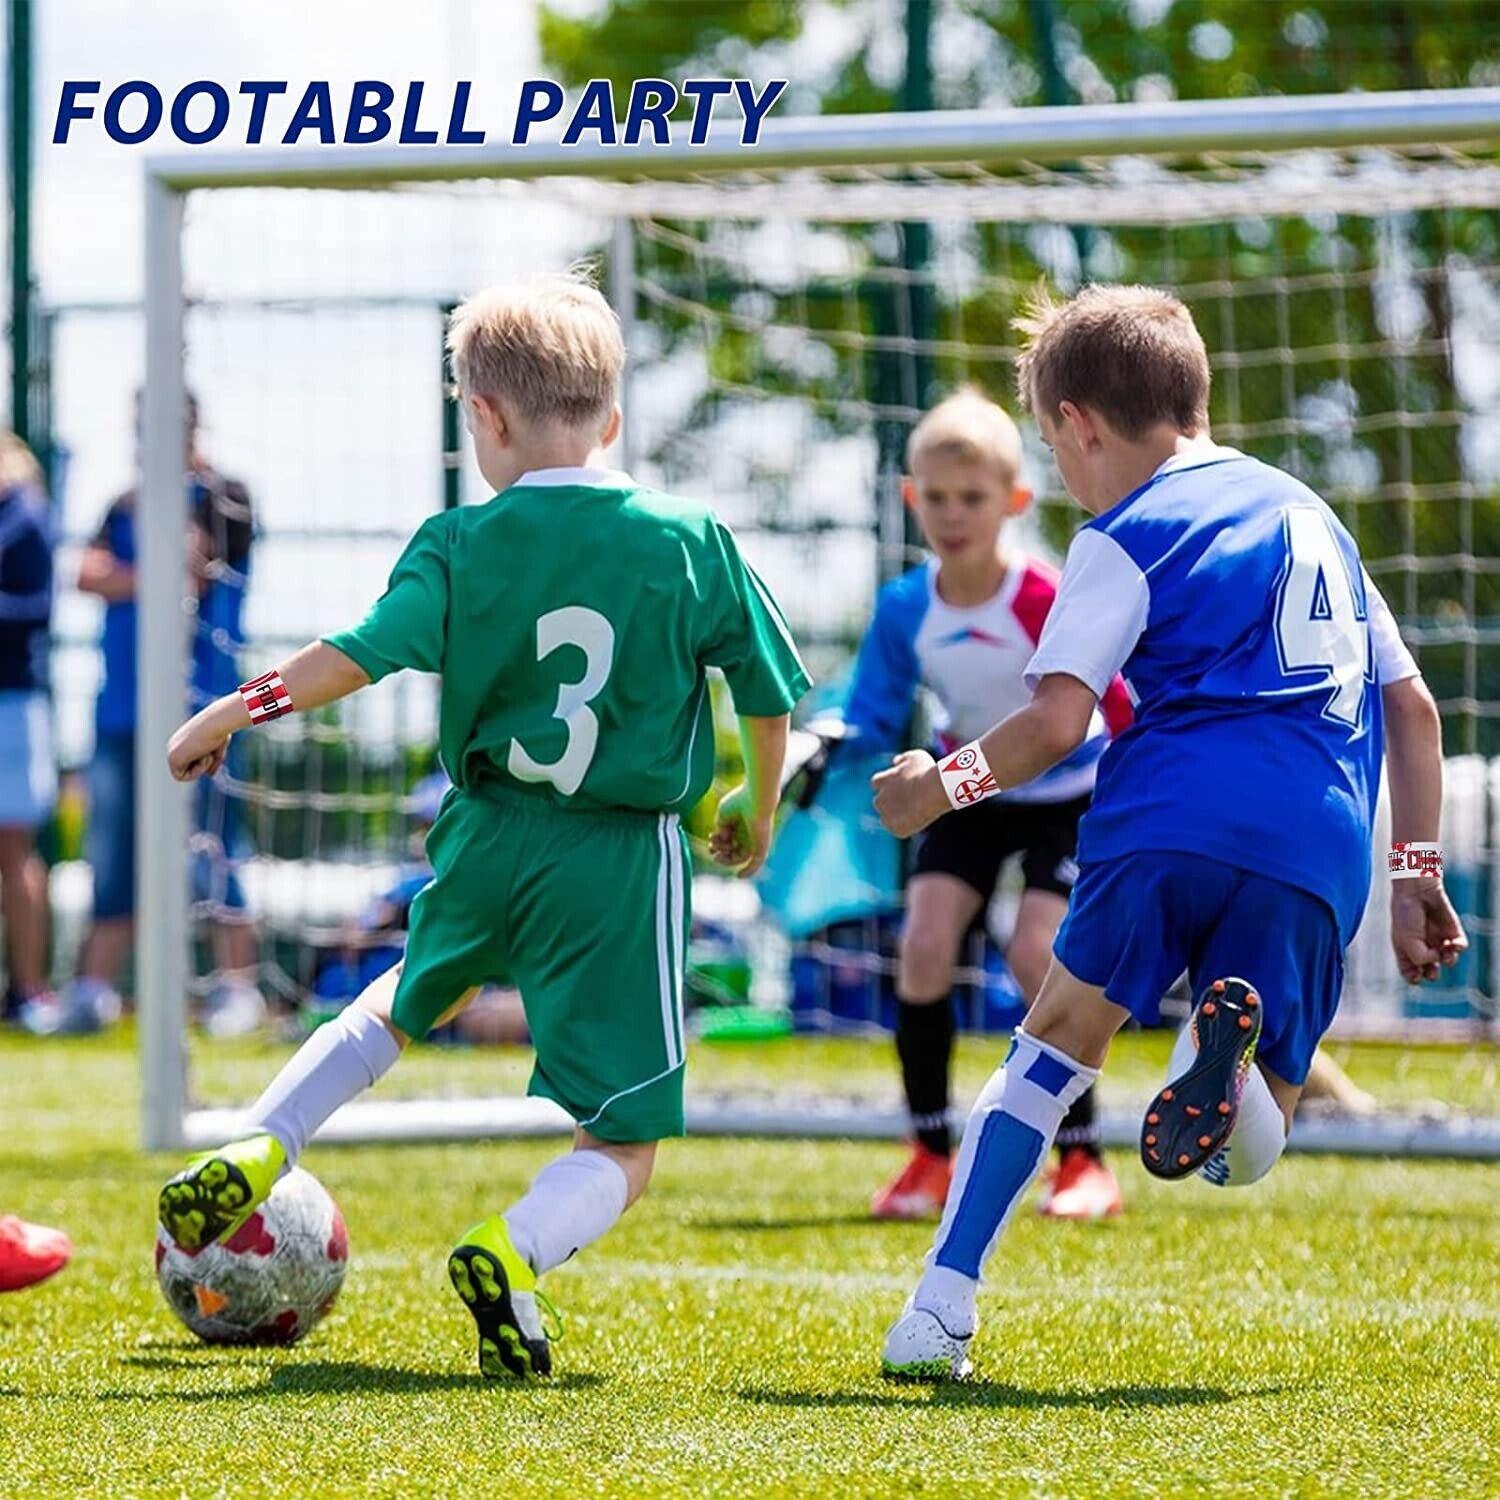 50 PCS Football-themed Slap Bracelet set Kids & Adults for memorable Party - Massive Discounts